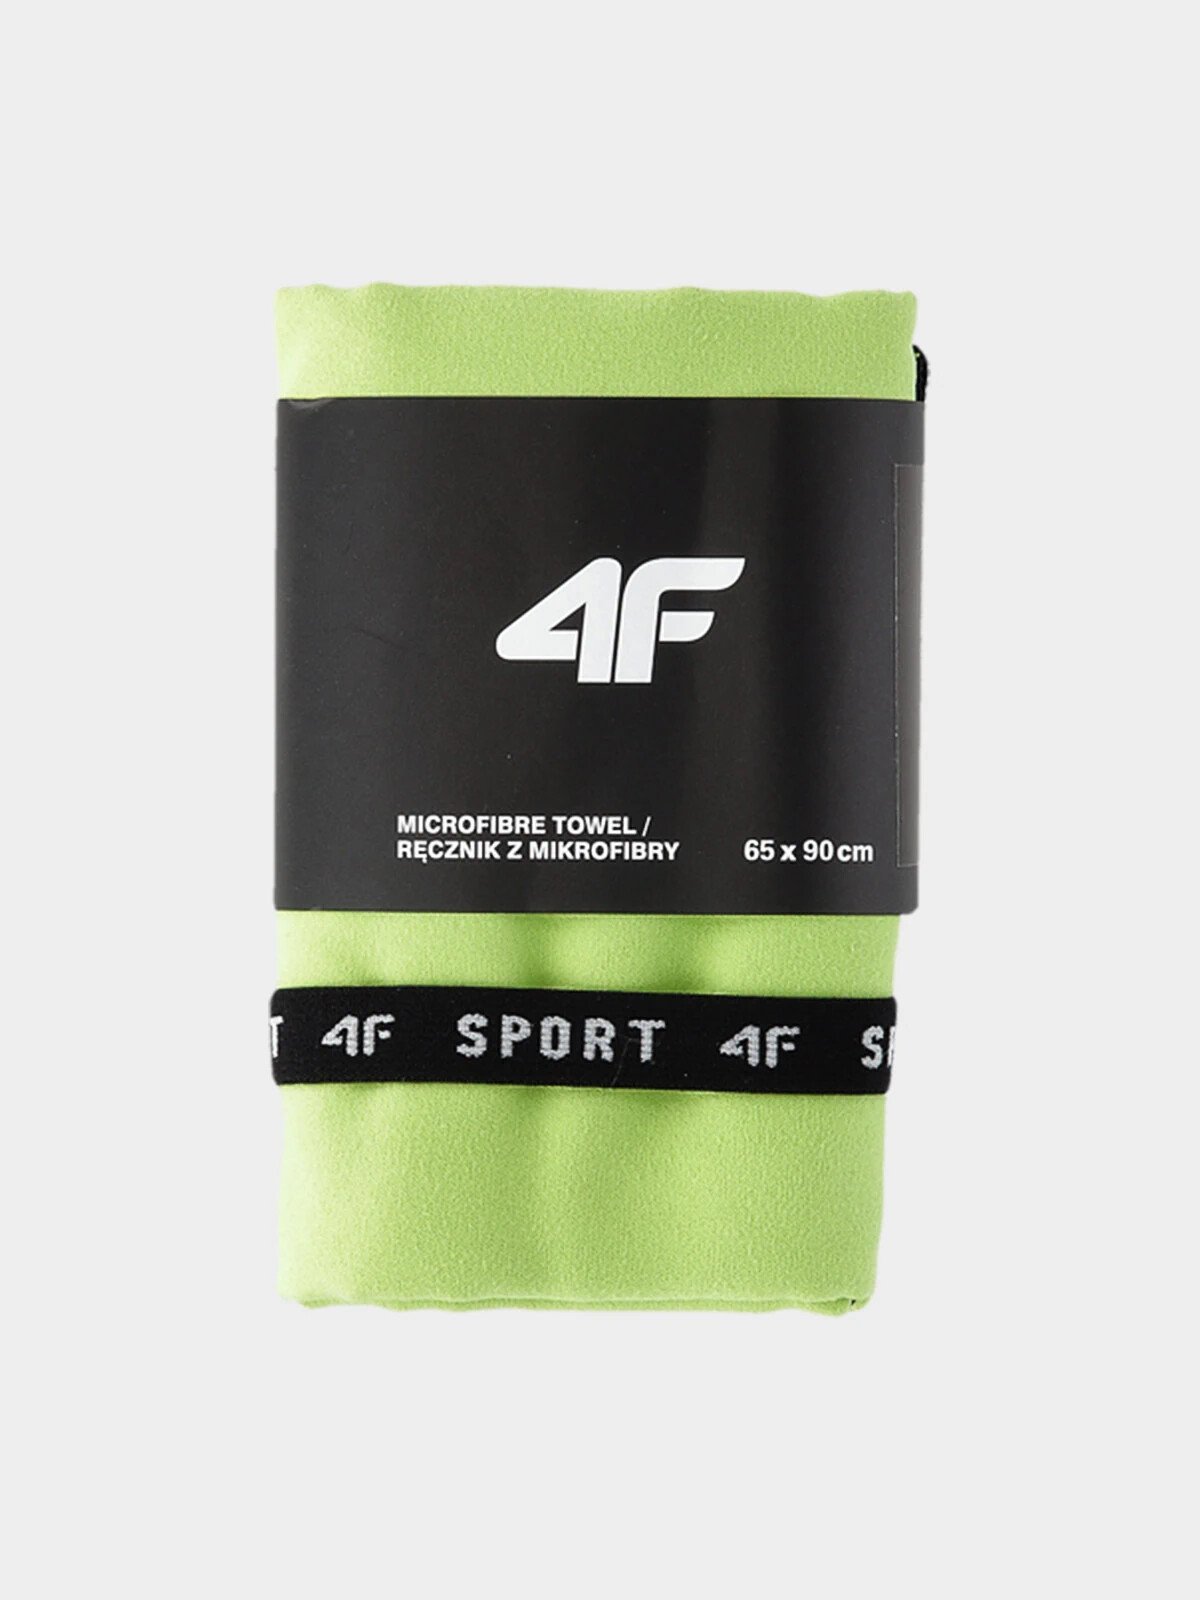 Sports Quick Drying Towel S (65 x 90cm) 4F - Green